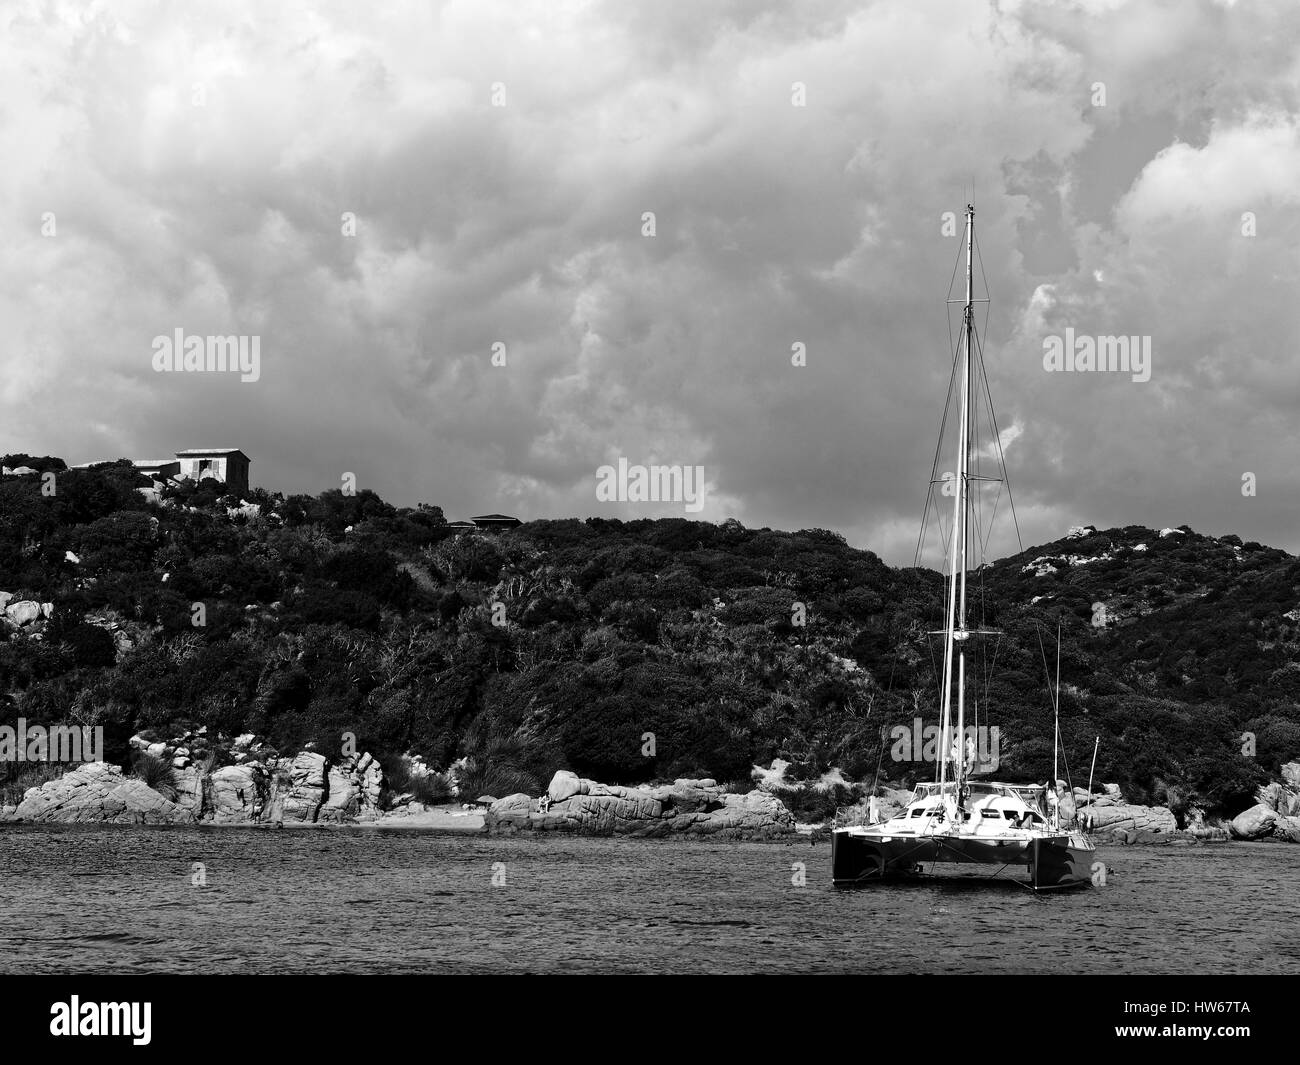 Bonifacio corsica france hi-res stock photography and images - Alamy